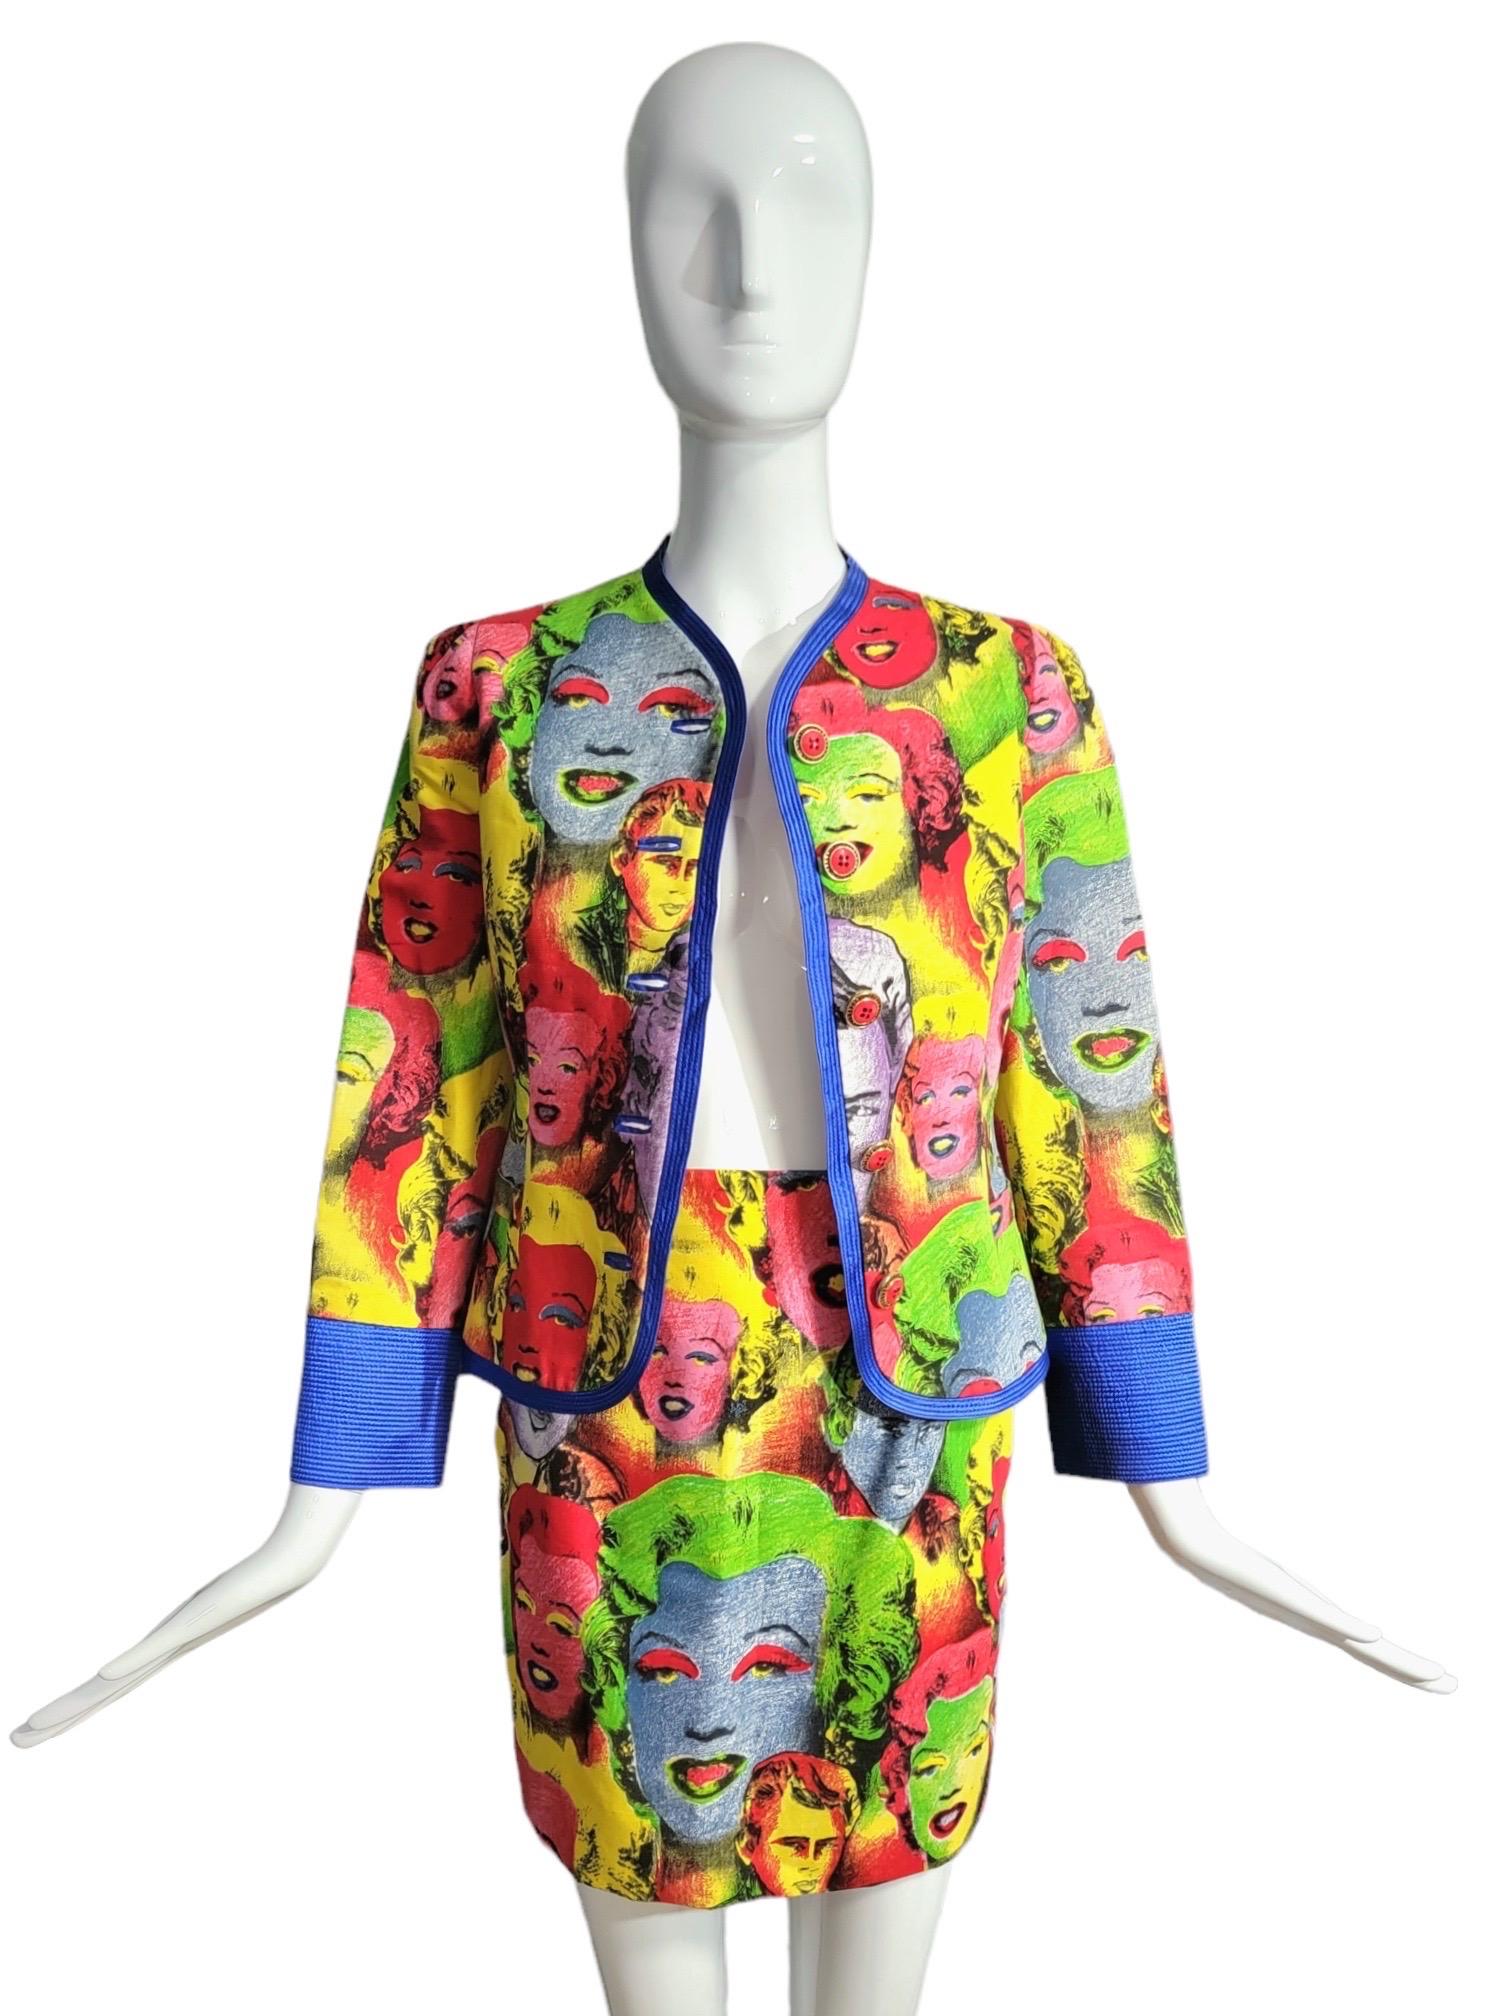  S/S 1991 Gianni Versace Marilyn Monroe Pop Art Warhol Skirt Suit For Sale 4